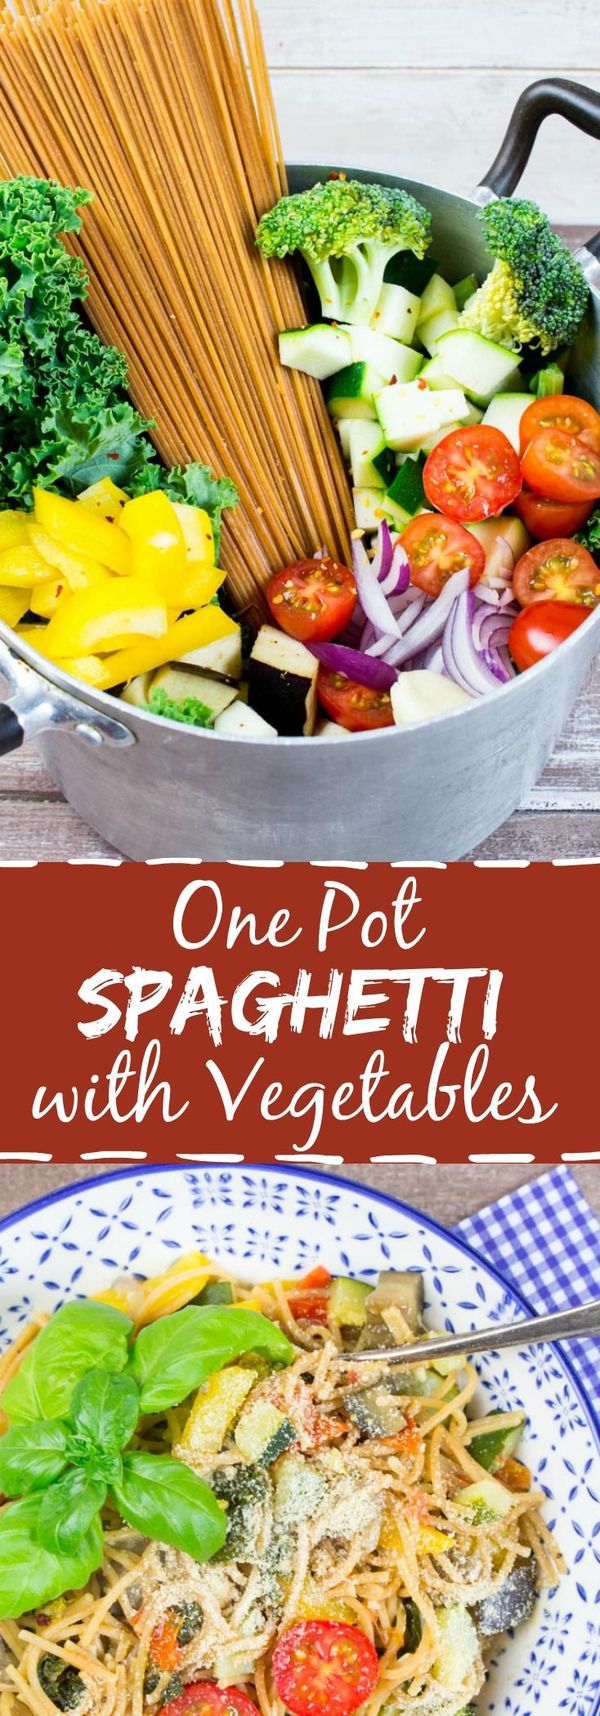 Vegan One Pot Spaghetti with Vegetables